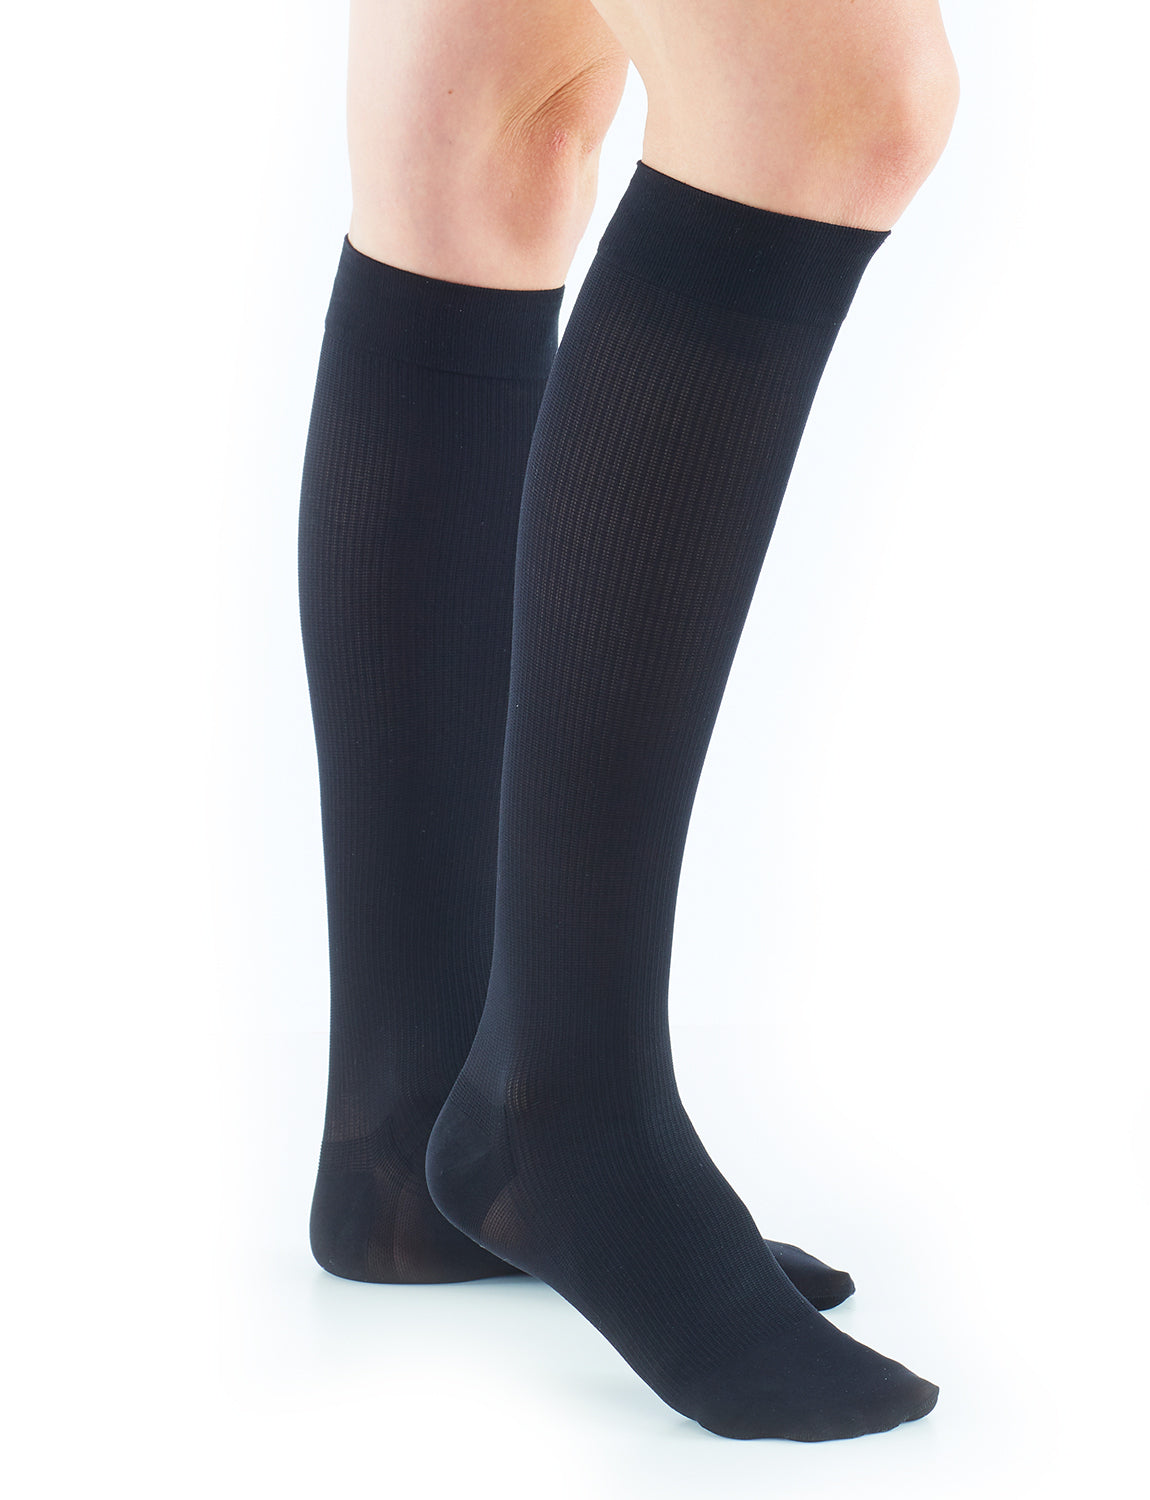 SHOPUS  Laite Hebe 3 Pack Medical Compression Sock-Compression Sock for  Women and Men-Best for Running,Nursing,Sports